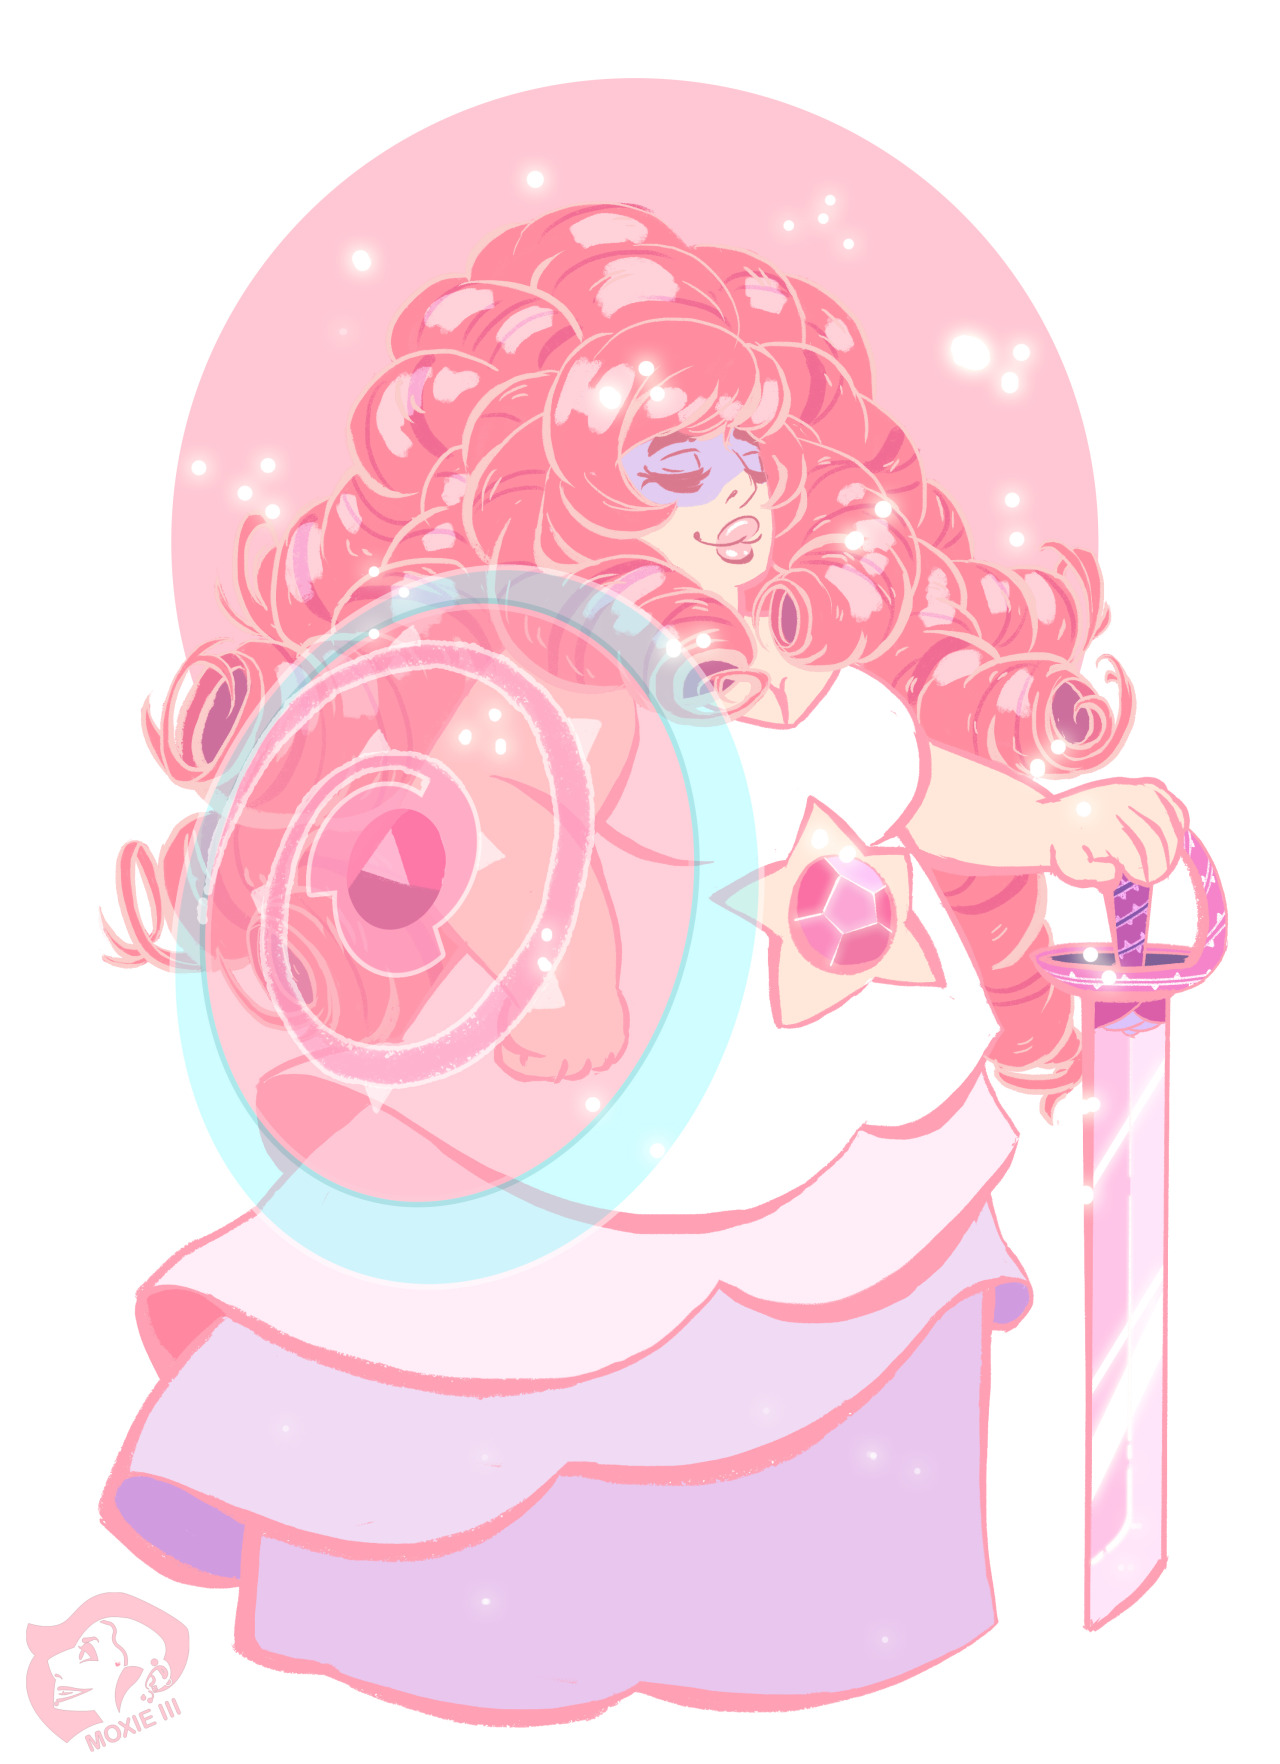 moxieiii:Rose Quartz! The big, beautiful gem herself